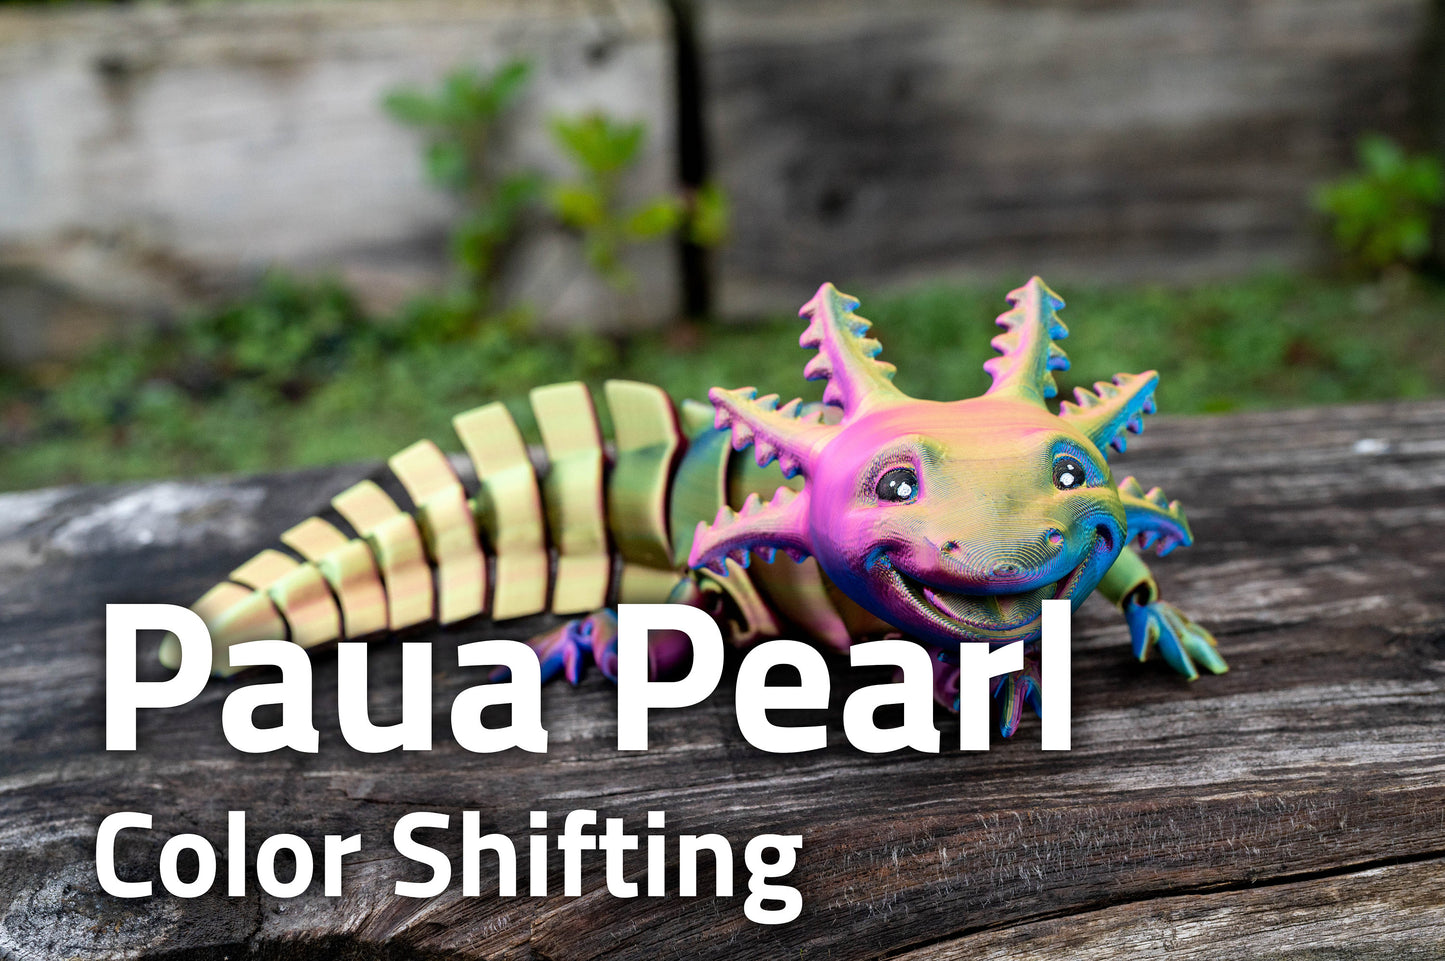 Big Smile Axolotl | Salamander | Lizard | Amphibian | Fully Articulated | 3D Printed